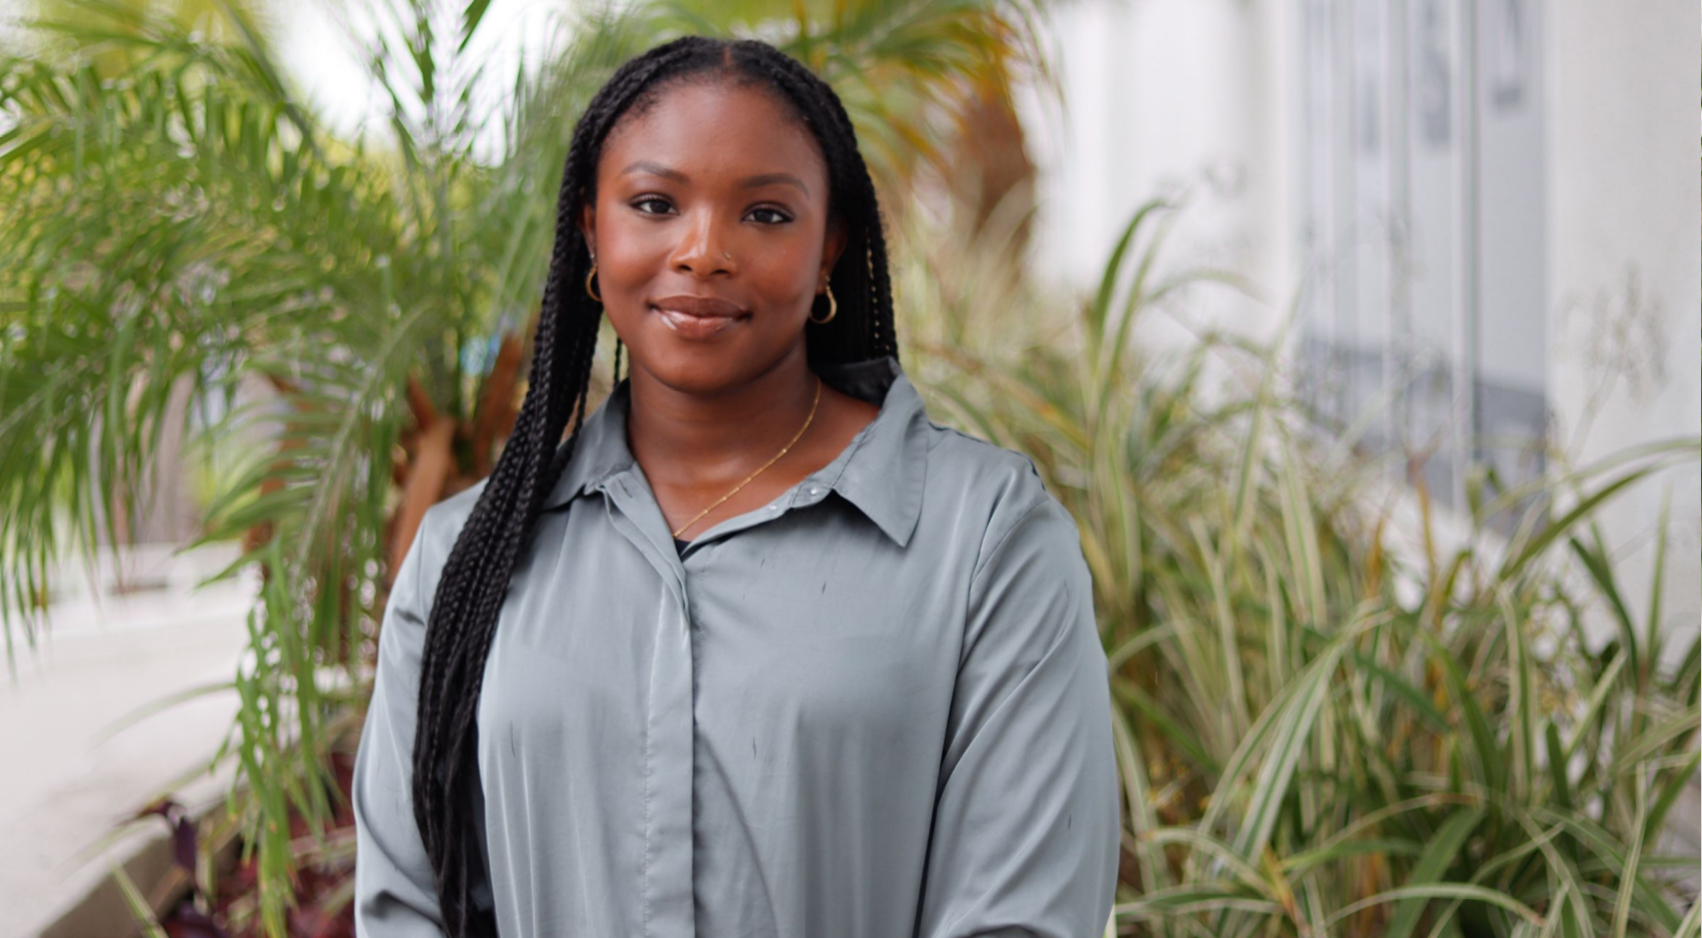 Eneyka Phifer-Bone is set to achieve her goal of graduating from SDSU's School of Nursing. (SDSU)